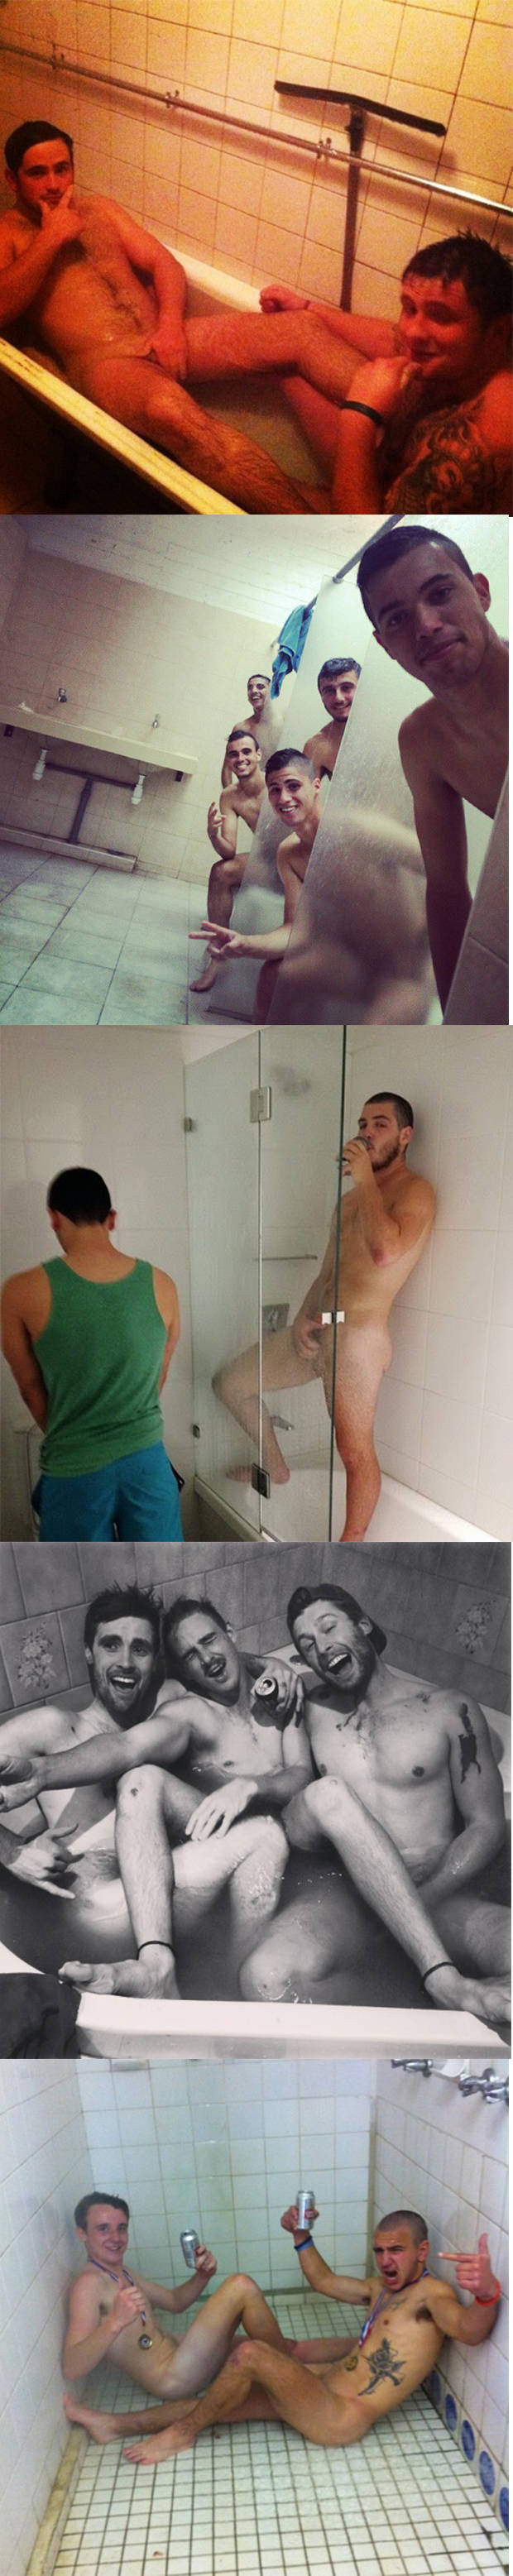 amateur drunk straight guys naked bathroom